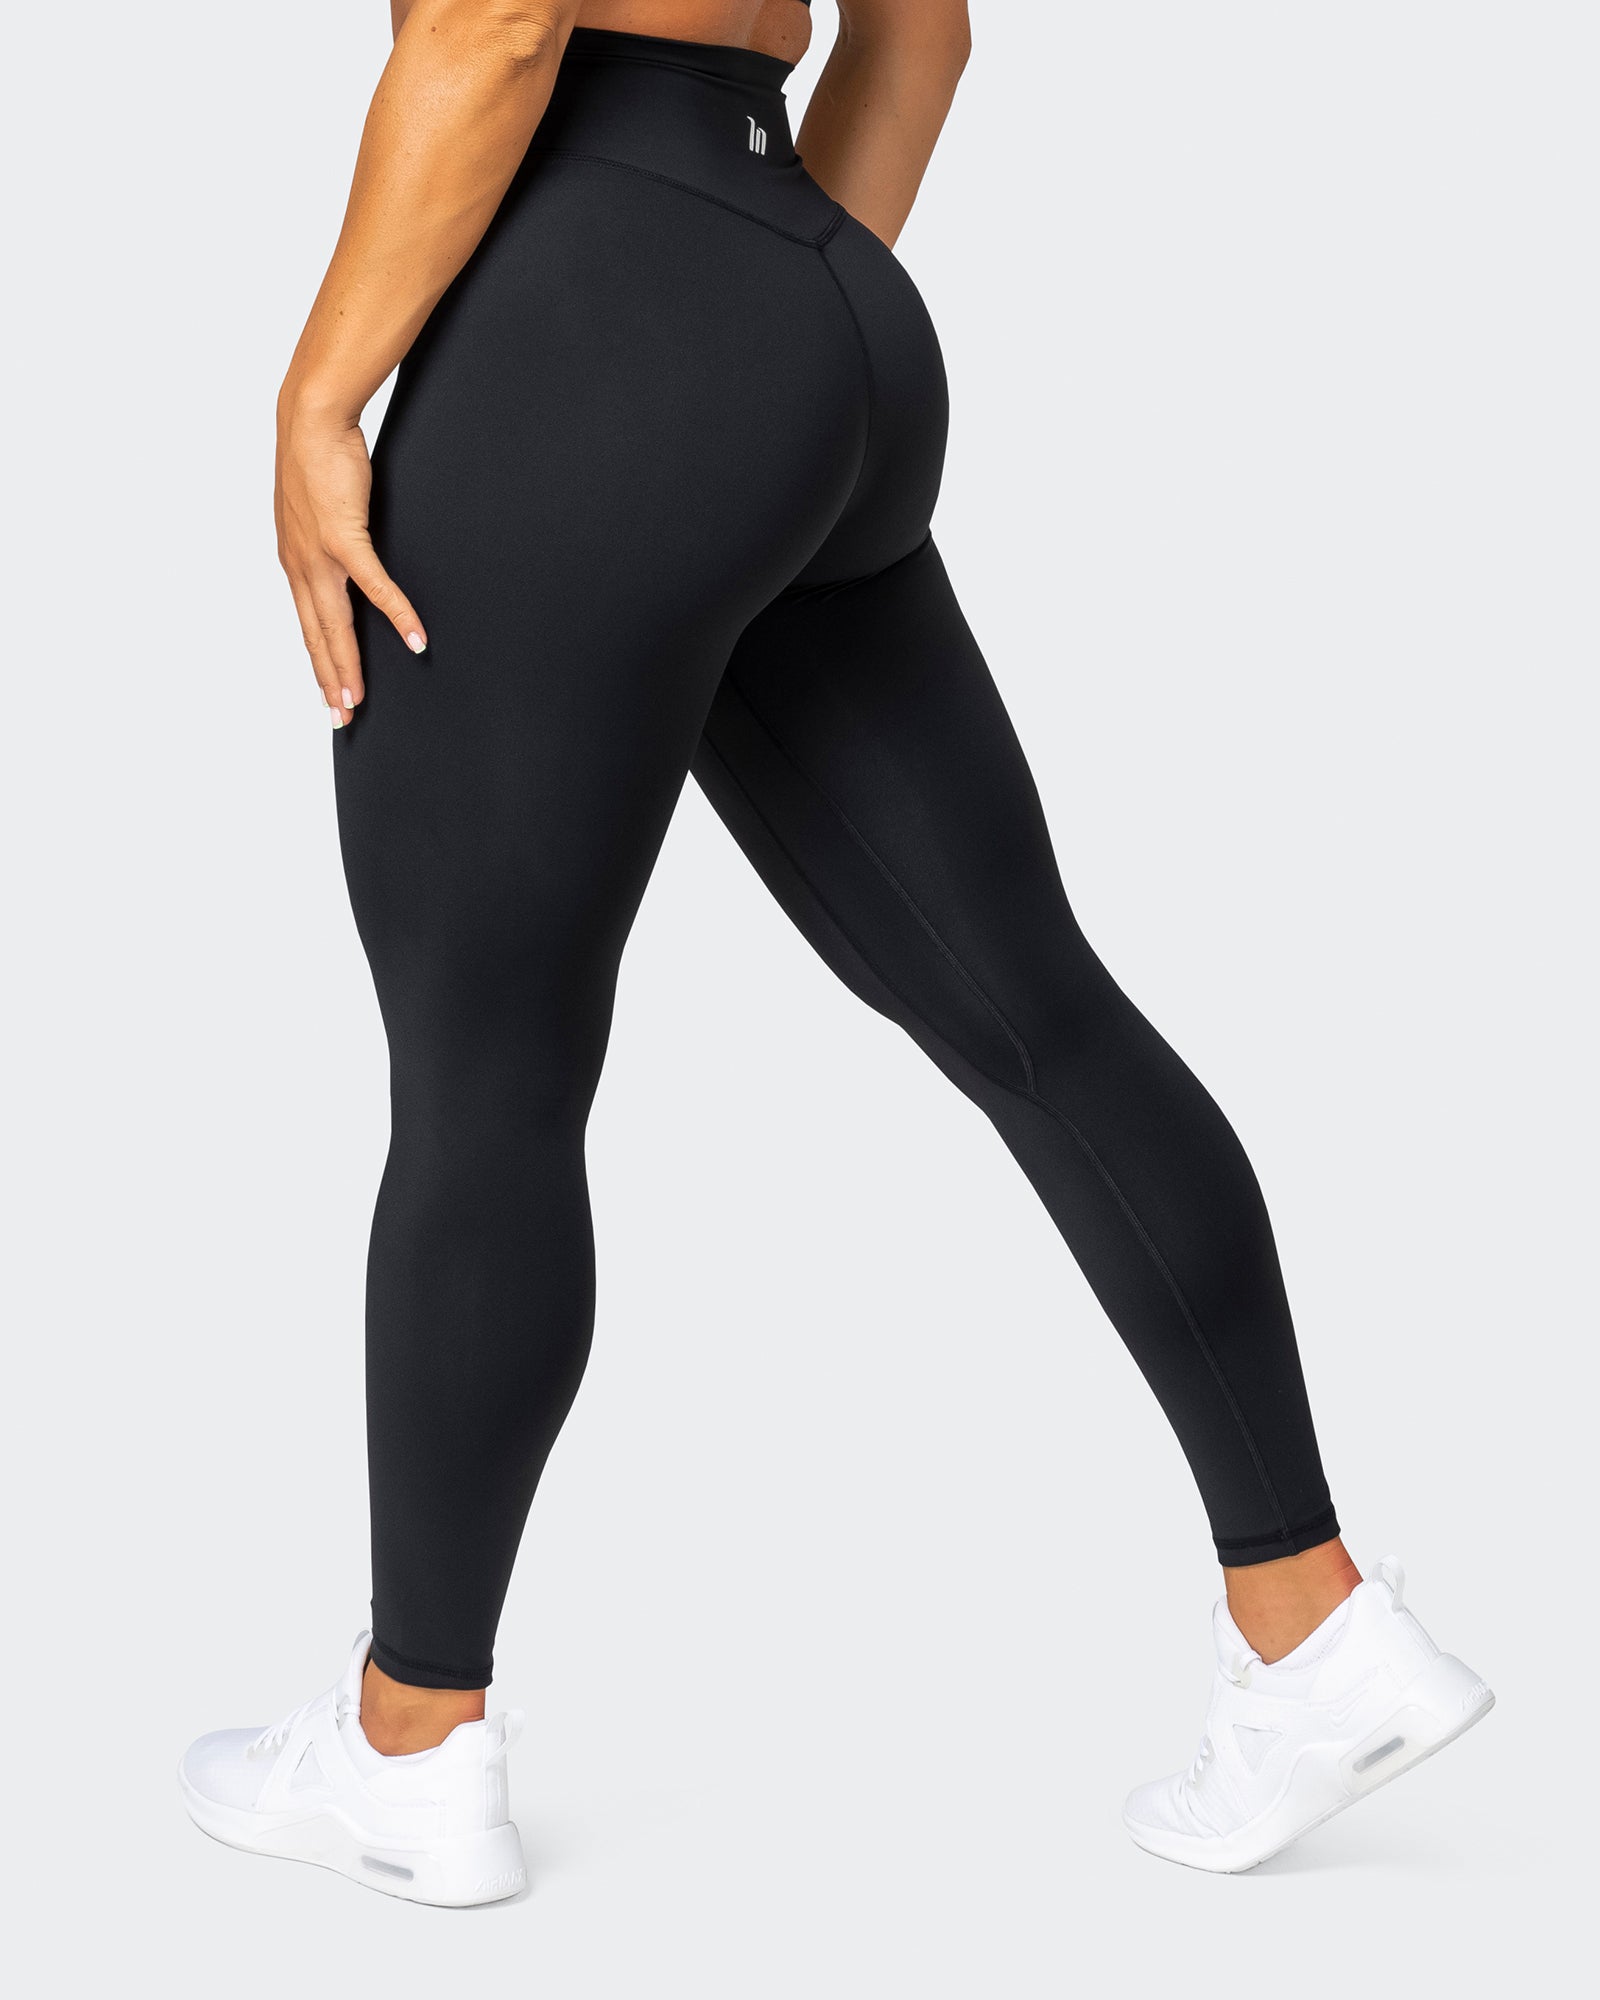 Women's Workout Leggings & Activewear Tights. Running Bare Gymwear - Studio  Ab-Tastic Legging 28